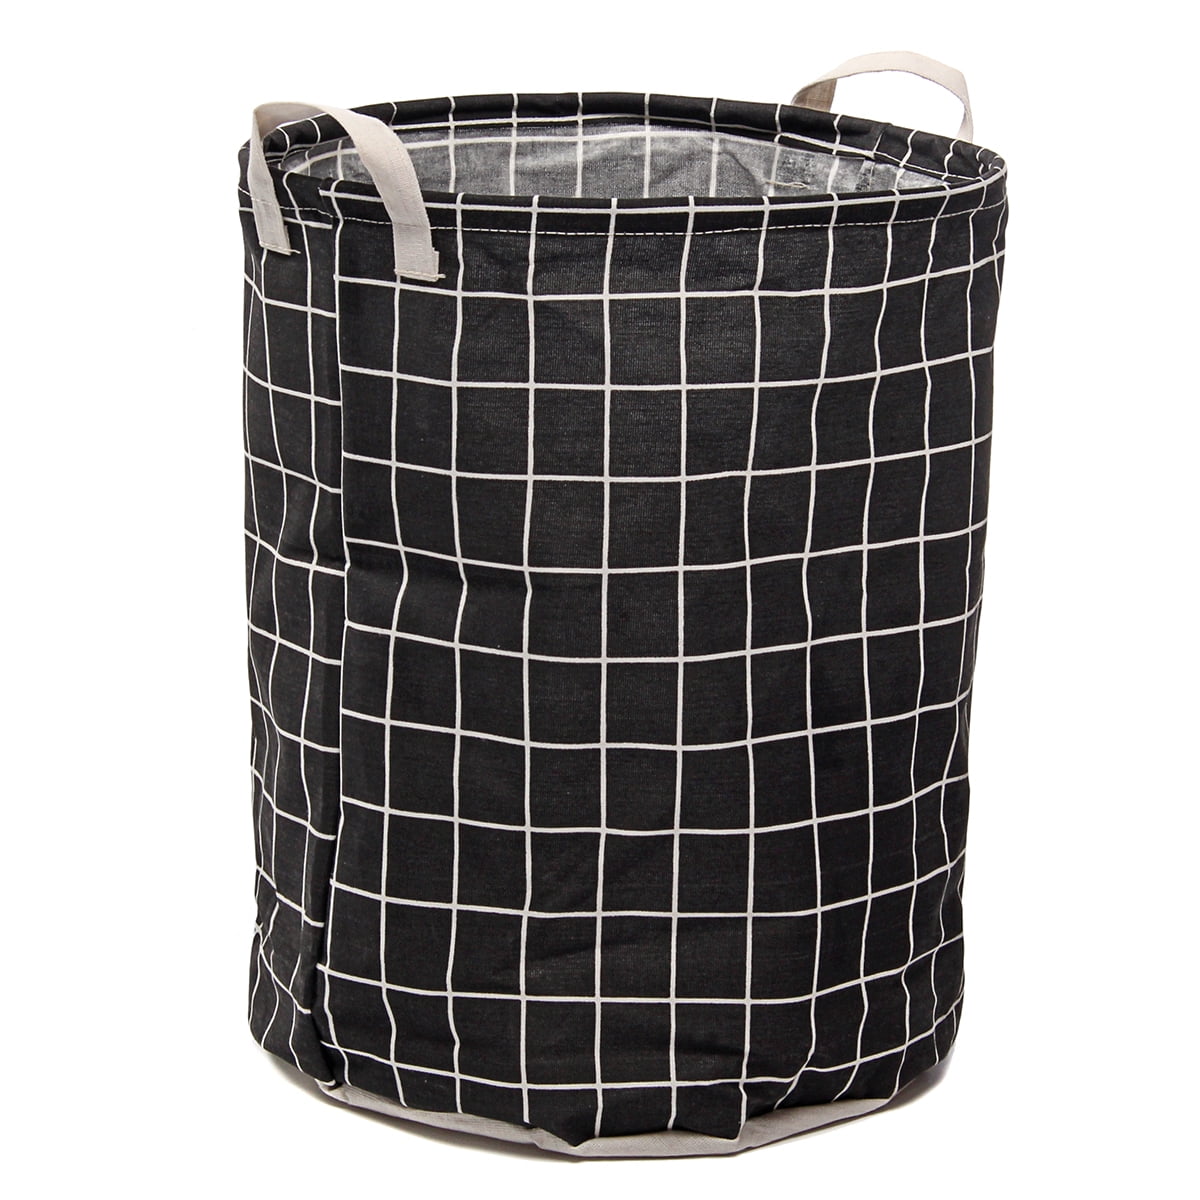 1-Foldable Dirty Clothes Laundry Basket Hamper Bin Storage Case Organizer Holder 